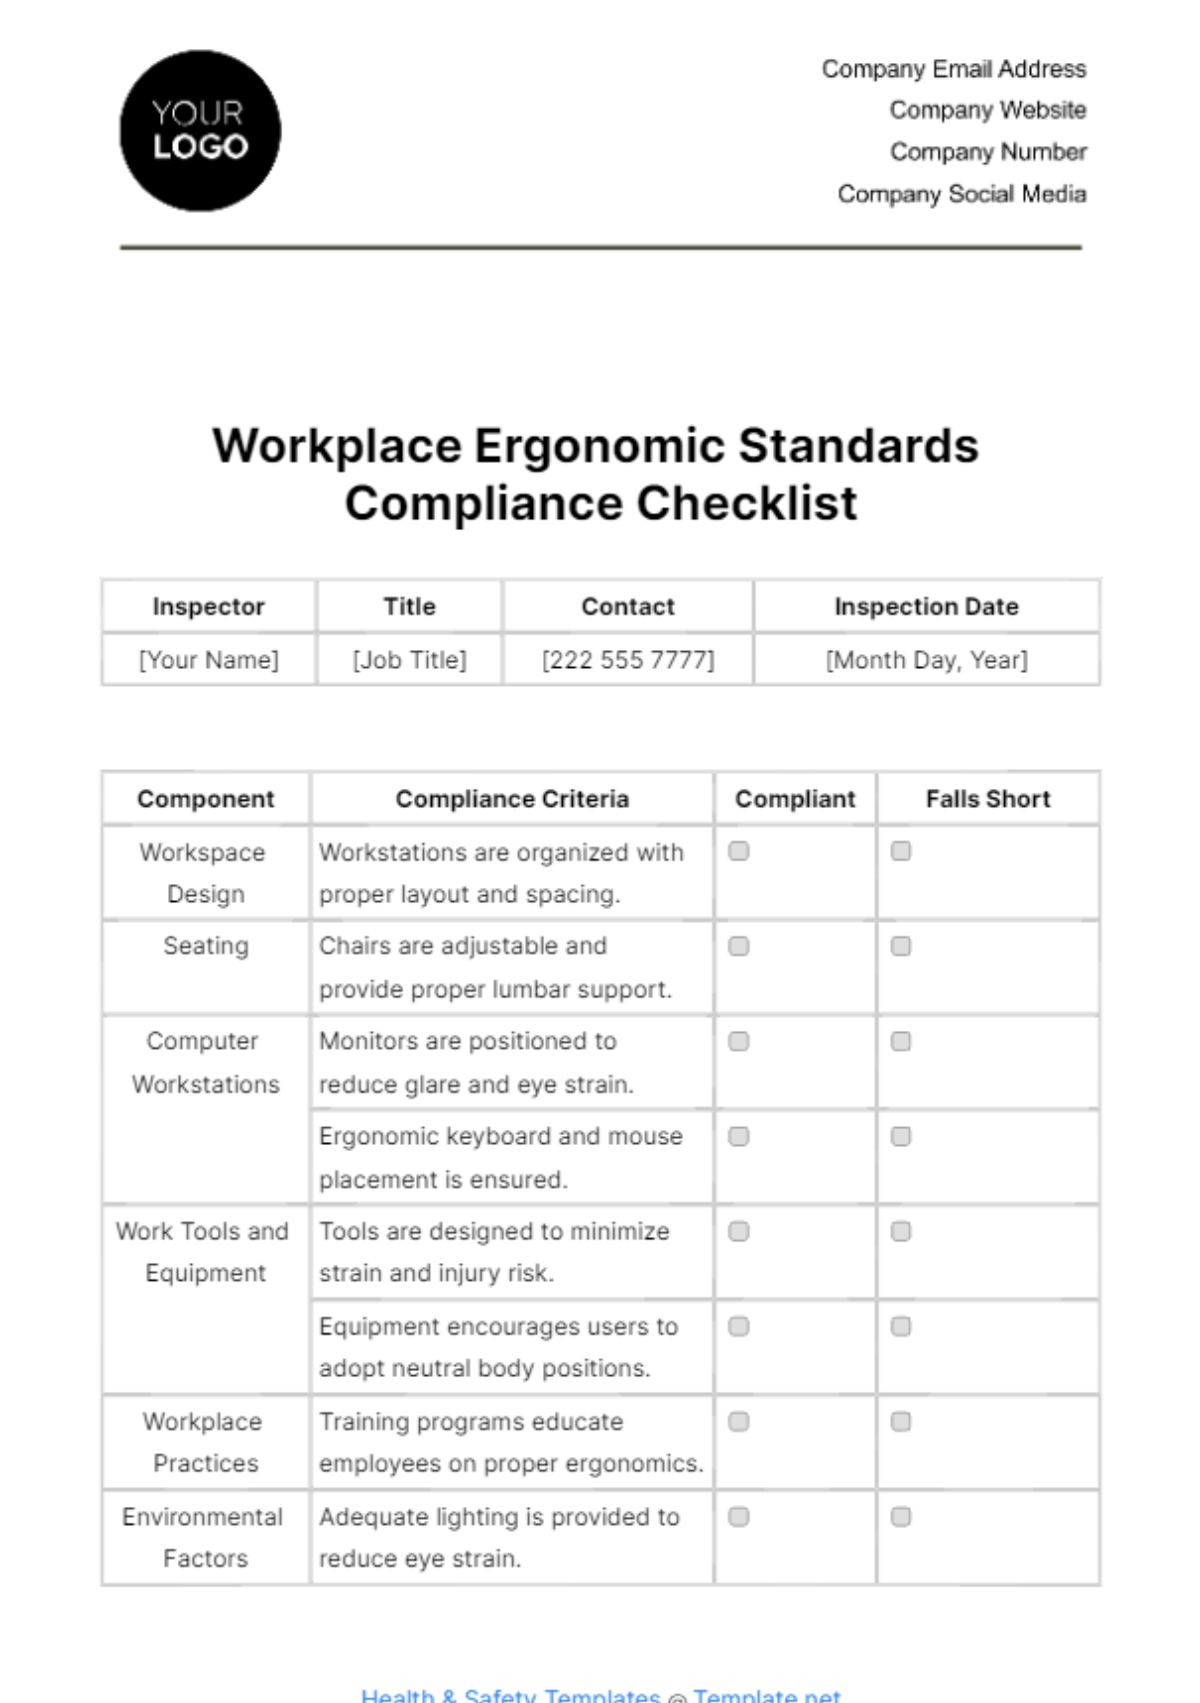 Workplace Ergonomic Standards Compliance Checklist Template